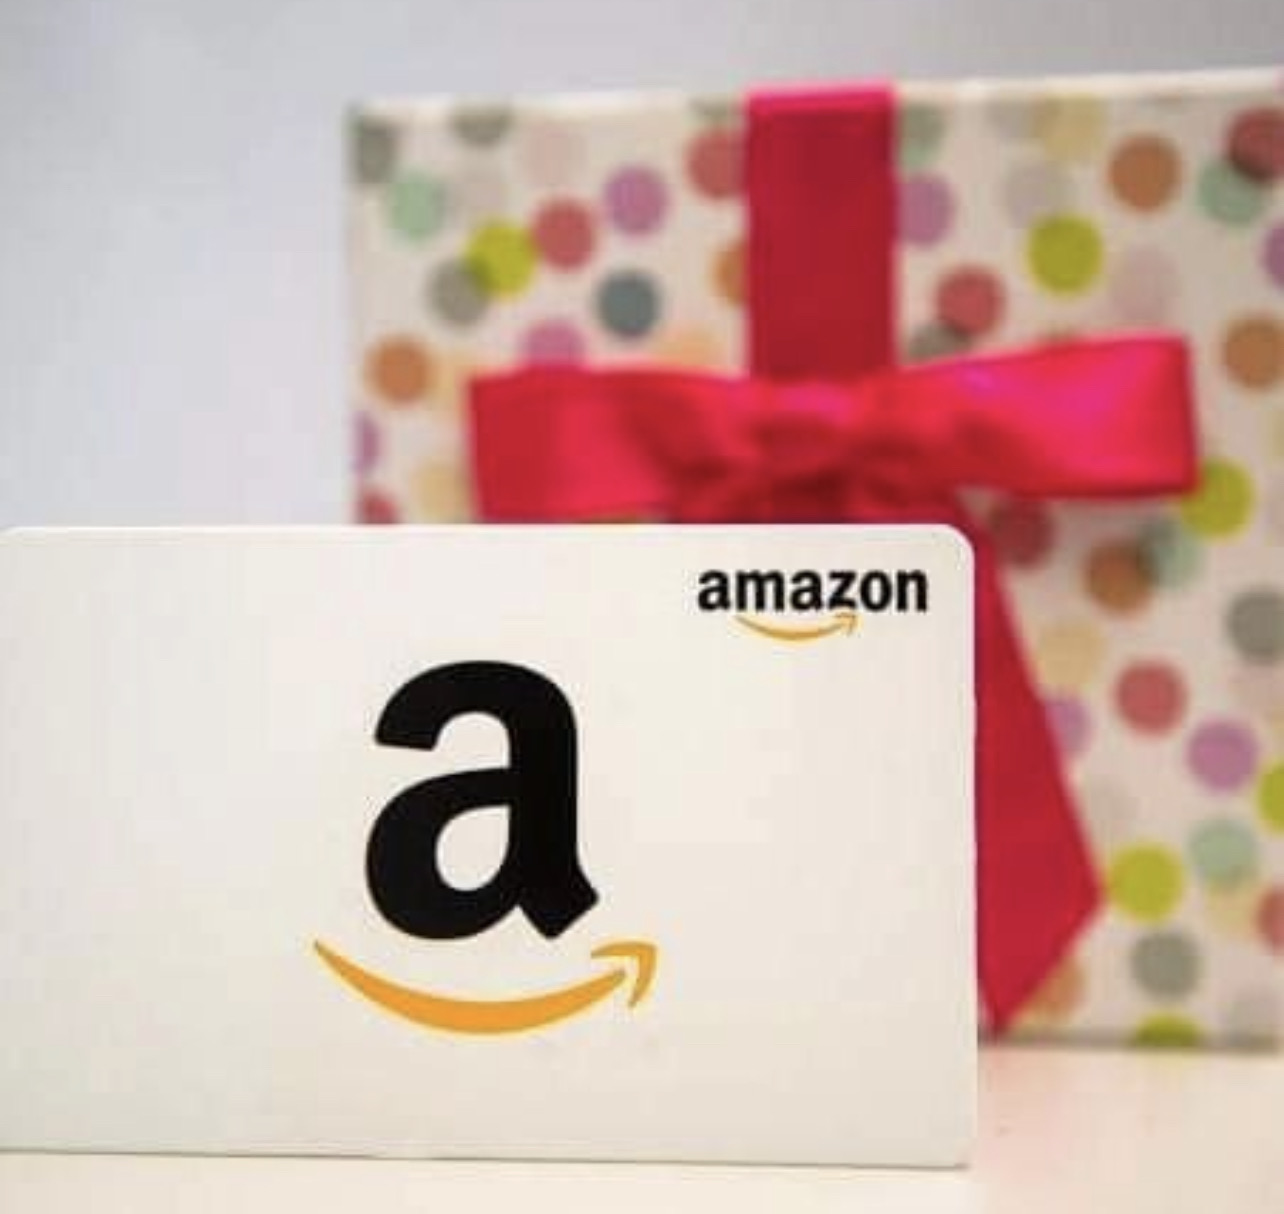 $200 Amazon Gift Card To Naira (Price &Exchange)